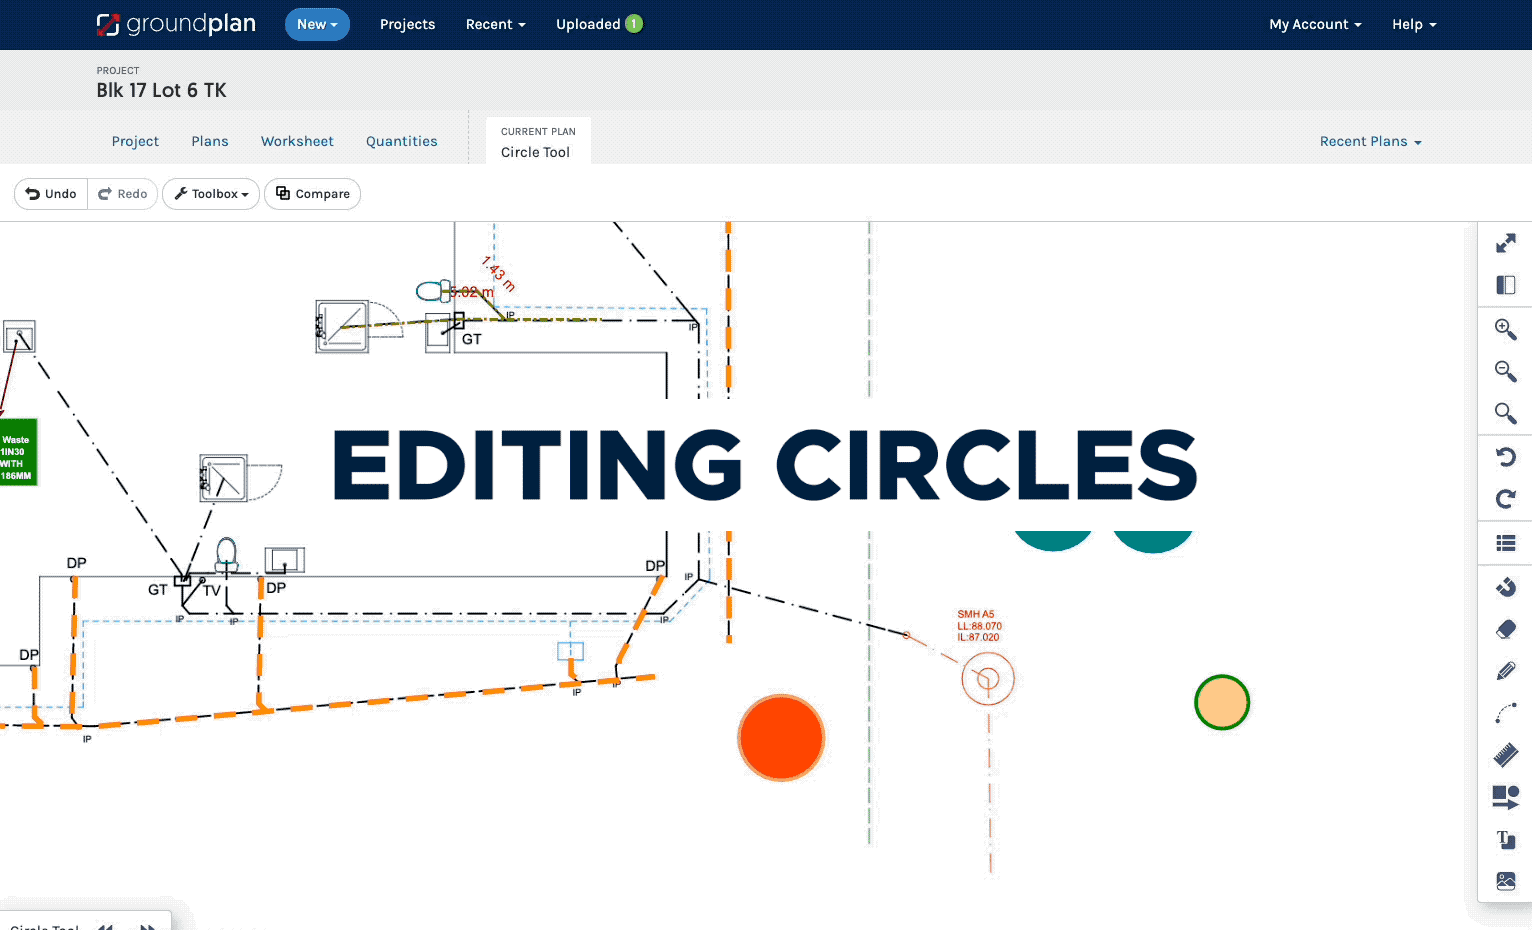 D1 - Editing Circles